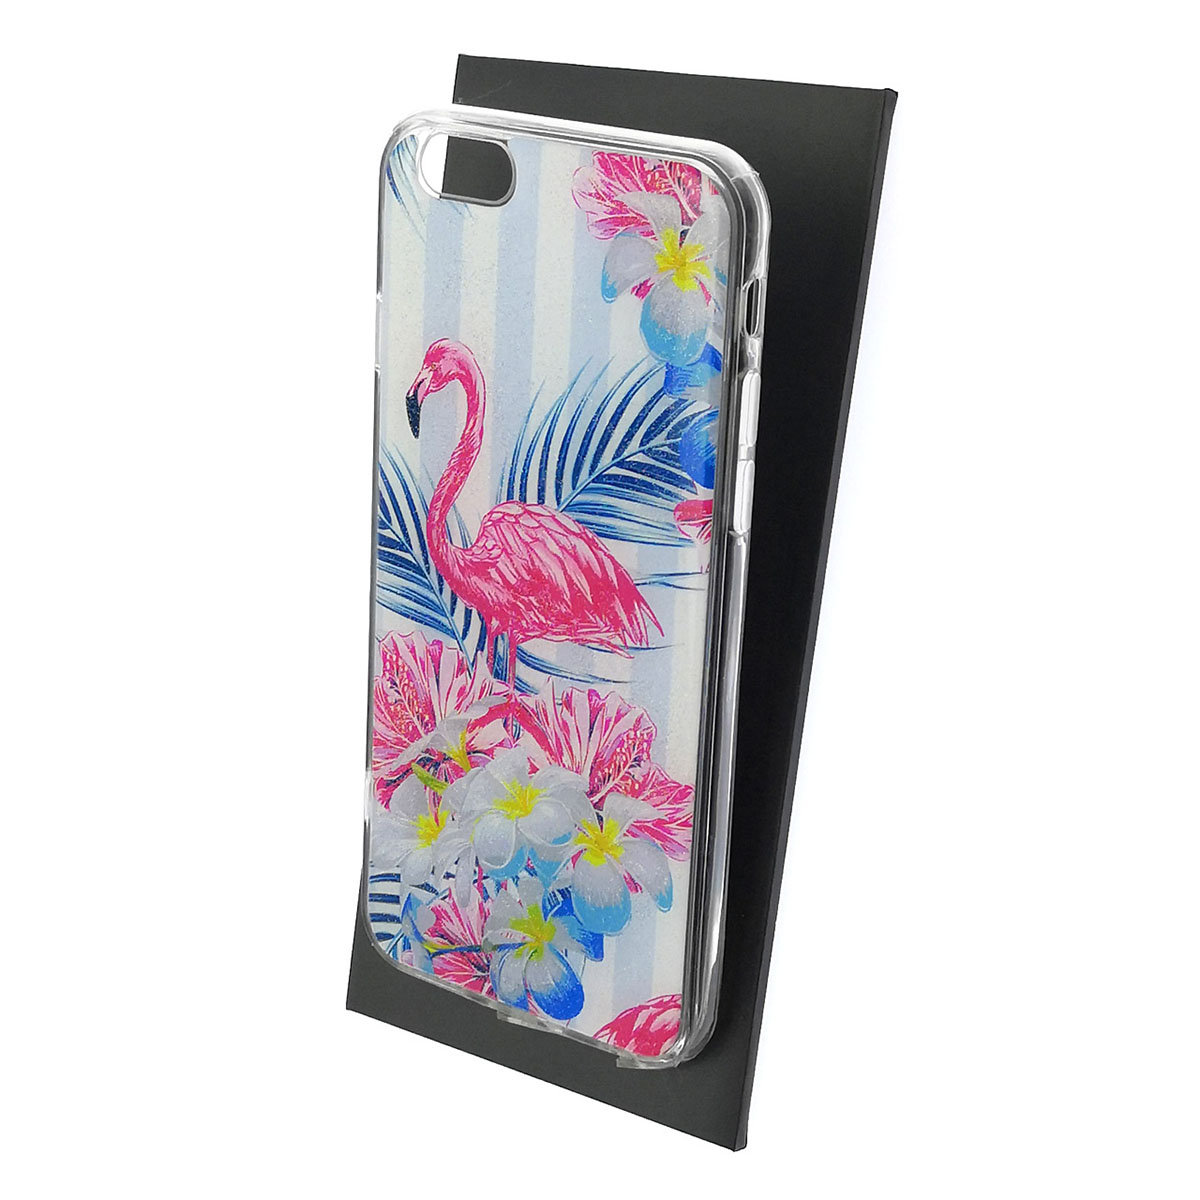 Чехол накладка для APPLE iPhone 6, iPhone 6G, iPhone 6S, силикон, глянцевый, блестки, рисунок Фламинго цветы